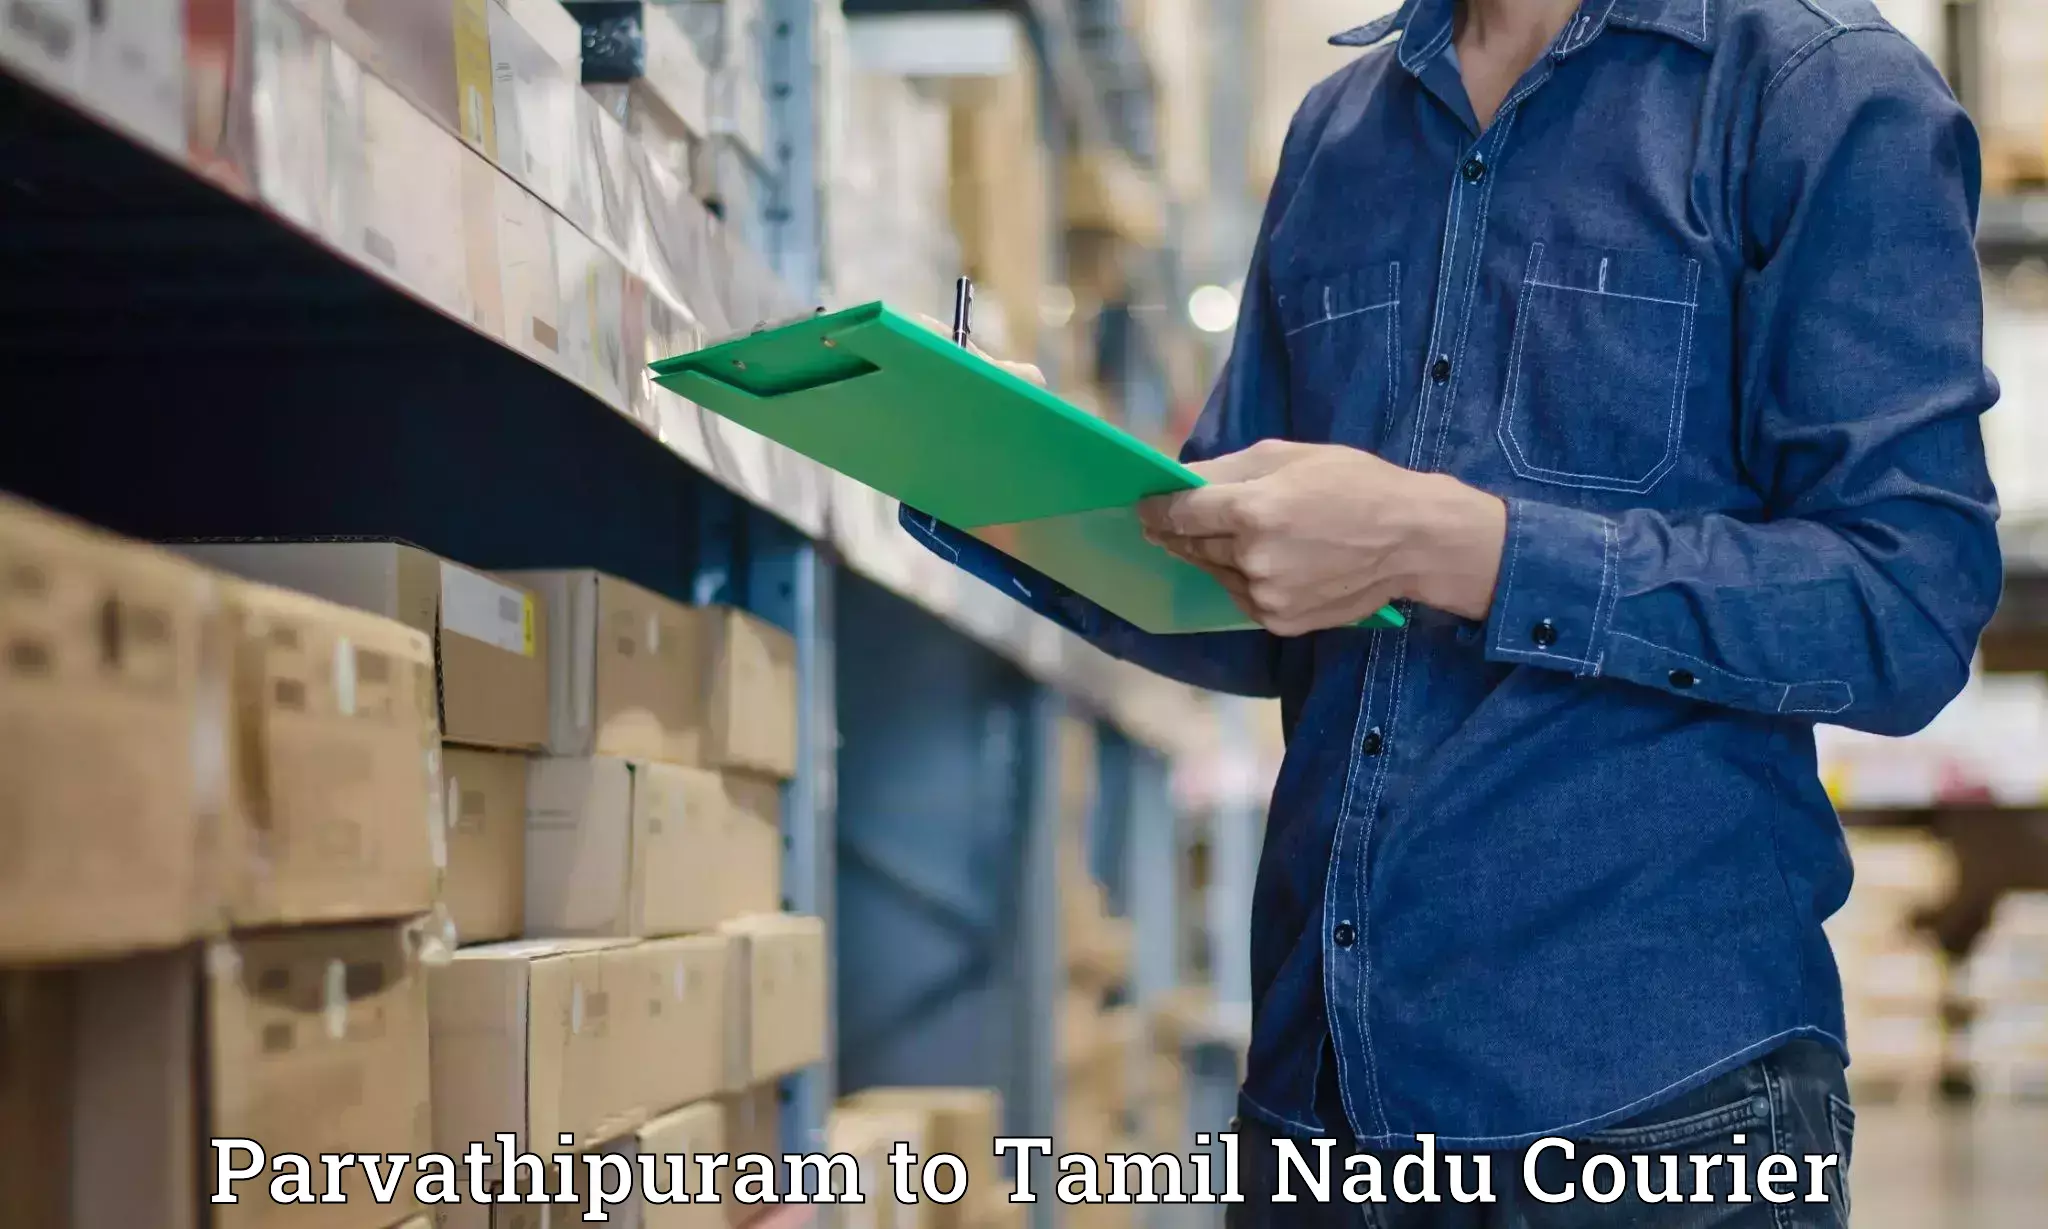 Local delivery service Parvathipuram to Tamil Nadu